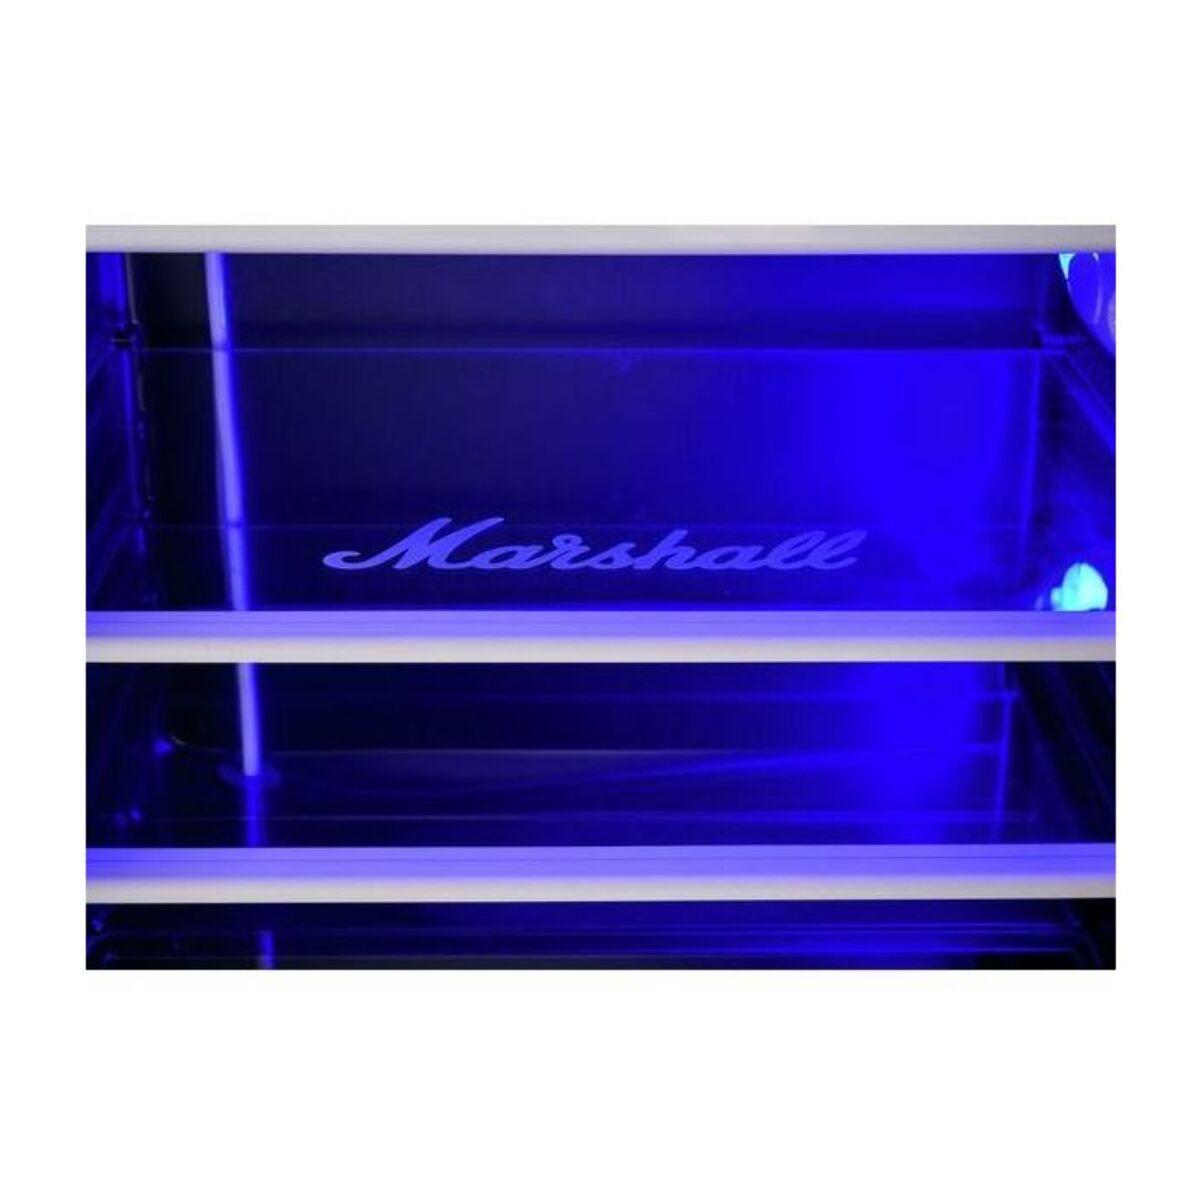 Réfrigérateur top MARSHALL MF 4.4 Black